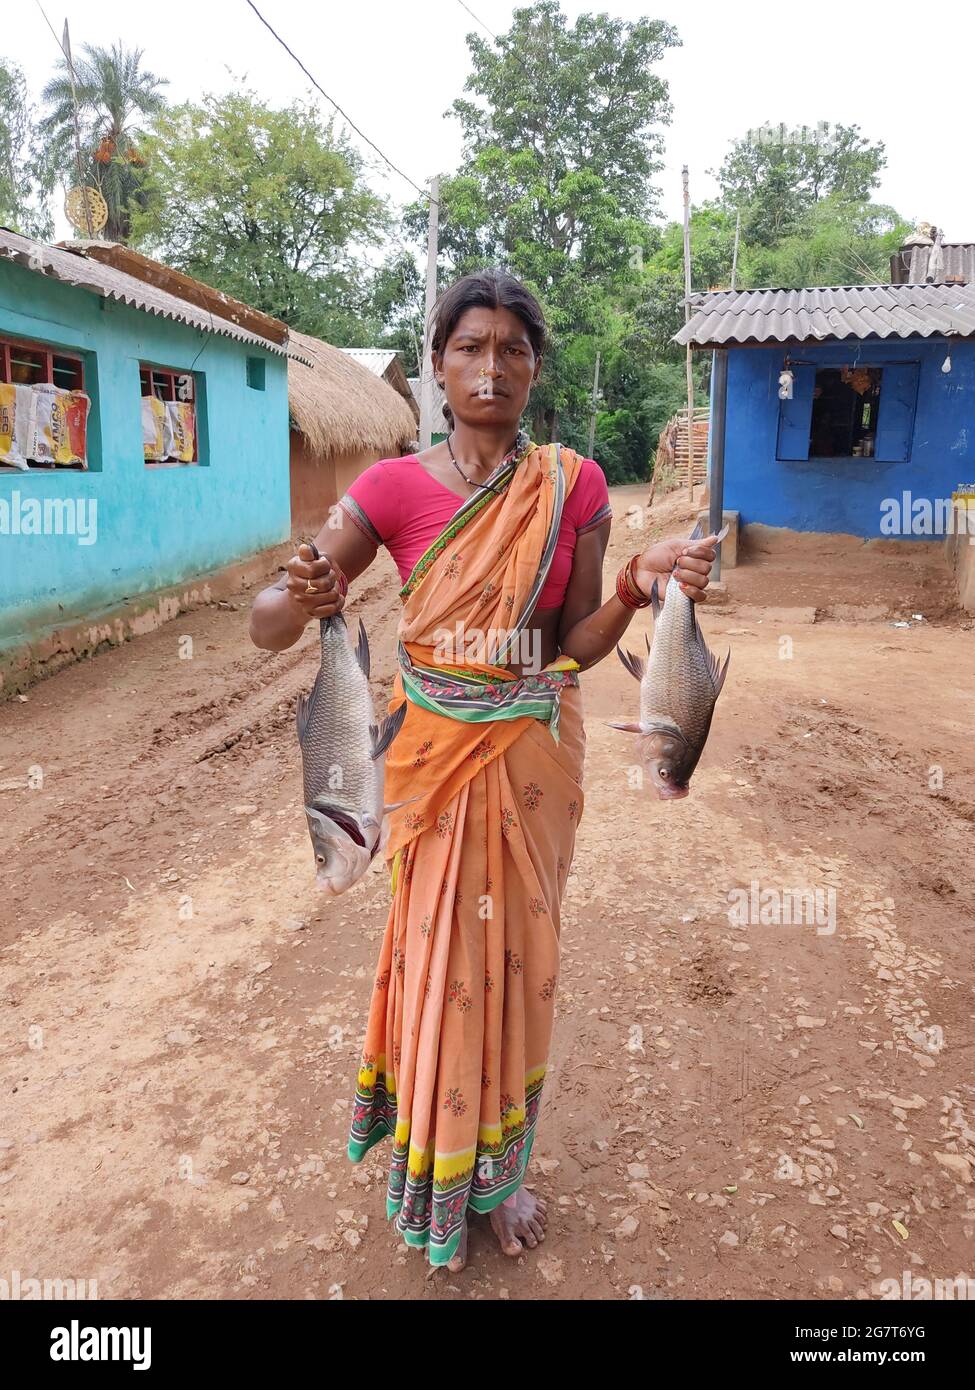 BHUBANESWAR, INDIA - Jun 25, 2021: tribal woman of the Odisha state of India with big carp fish in hand Stock Photo